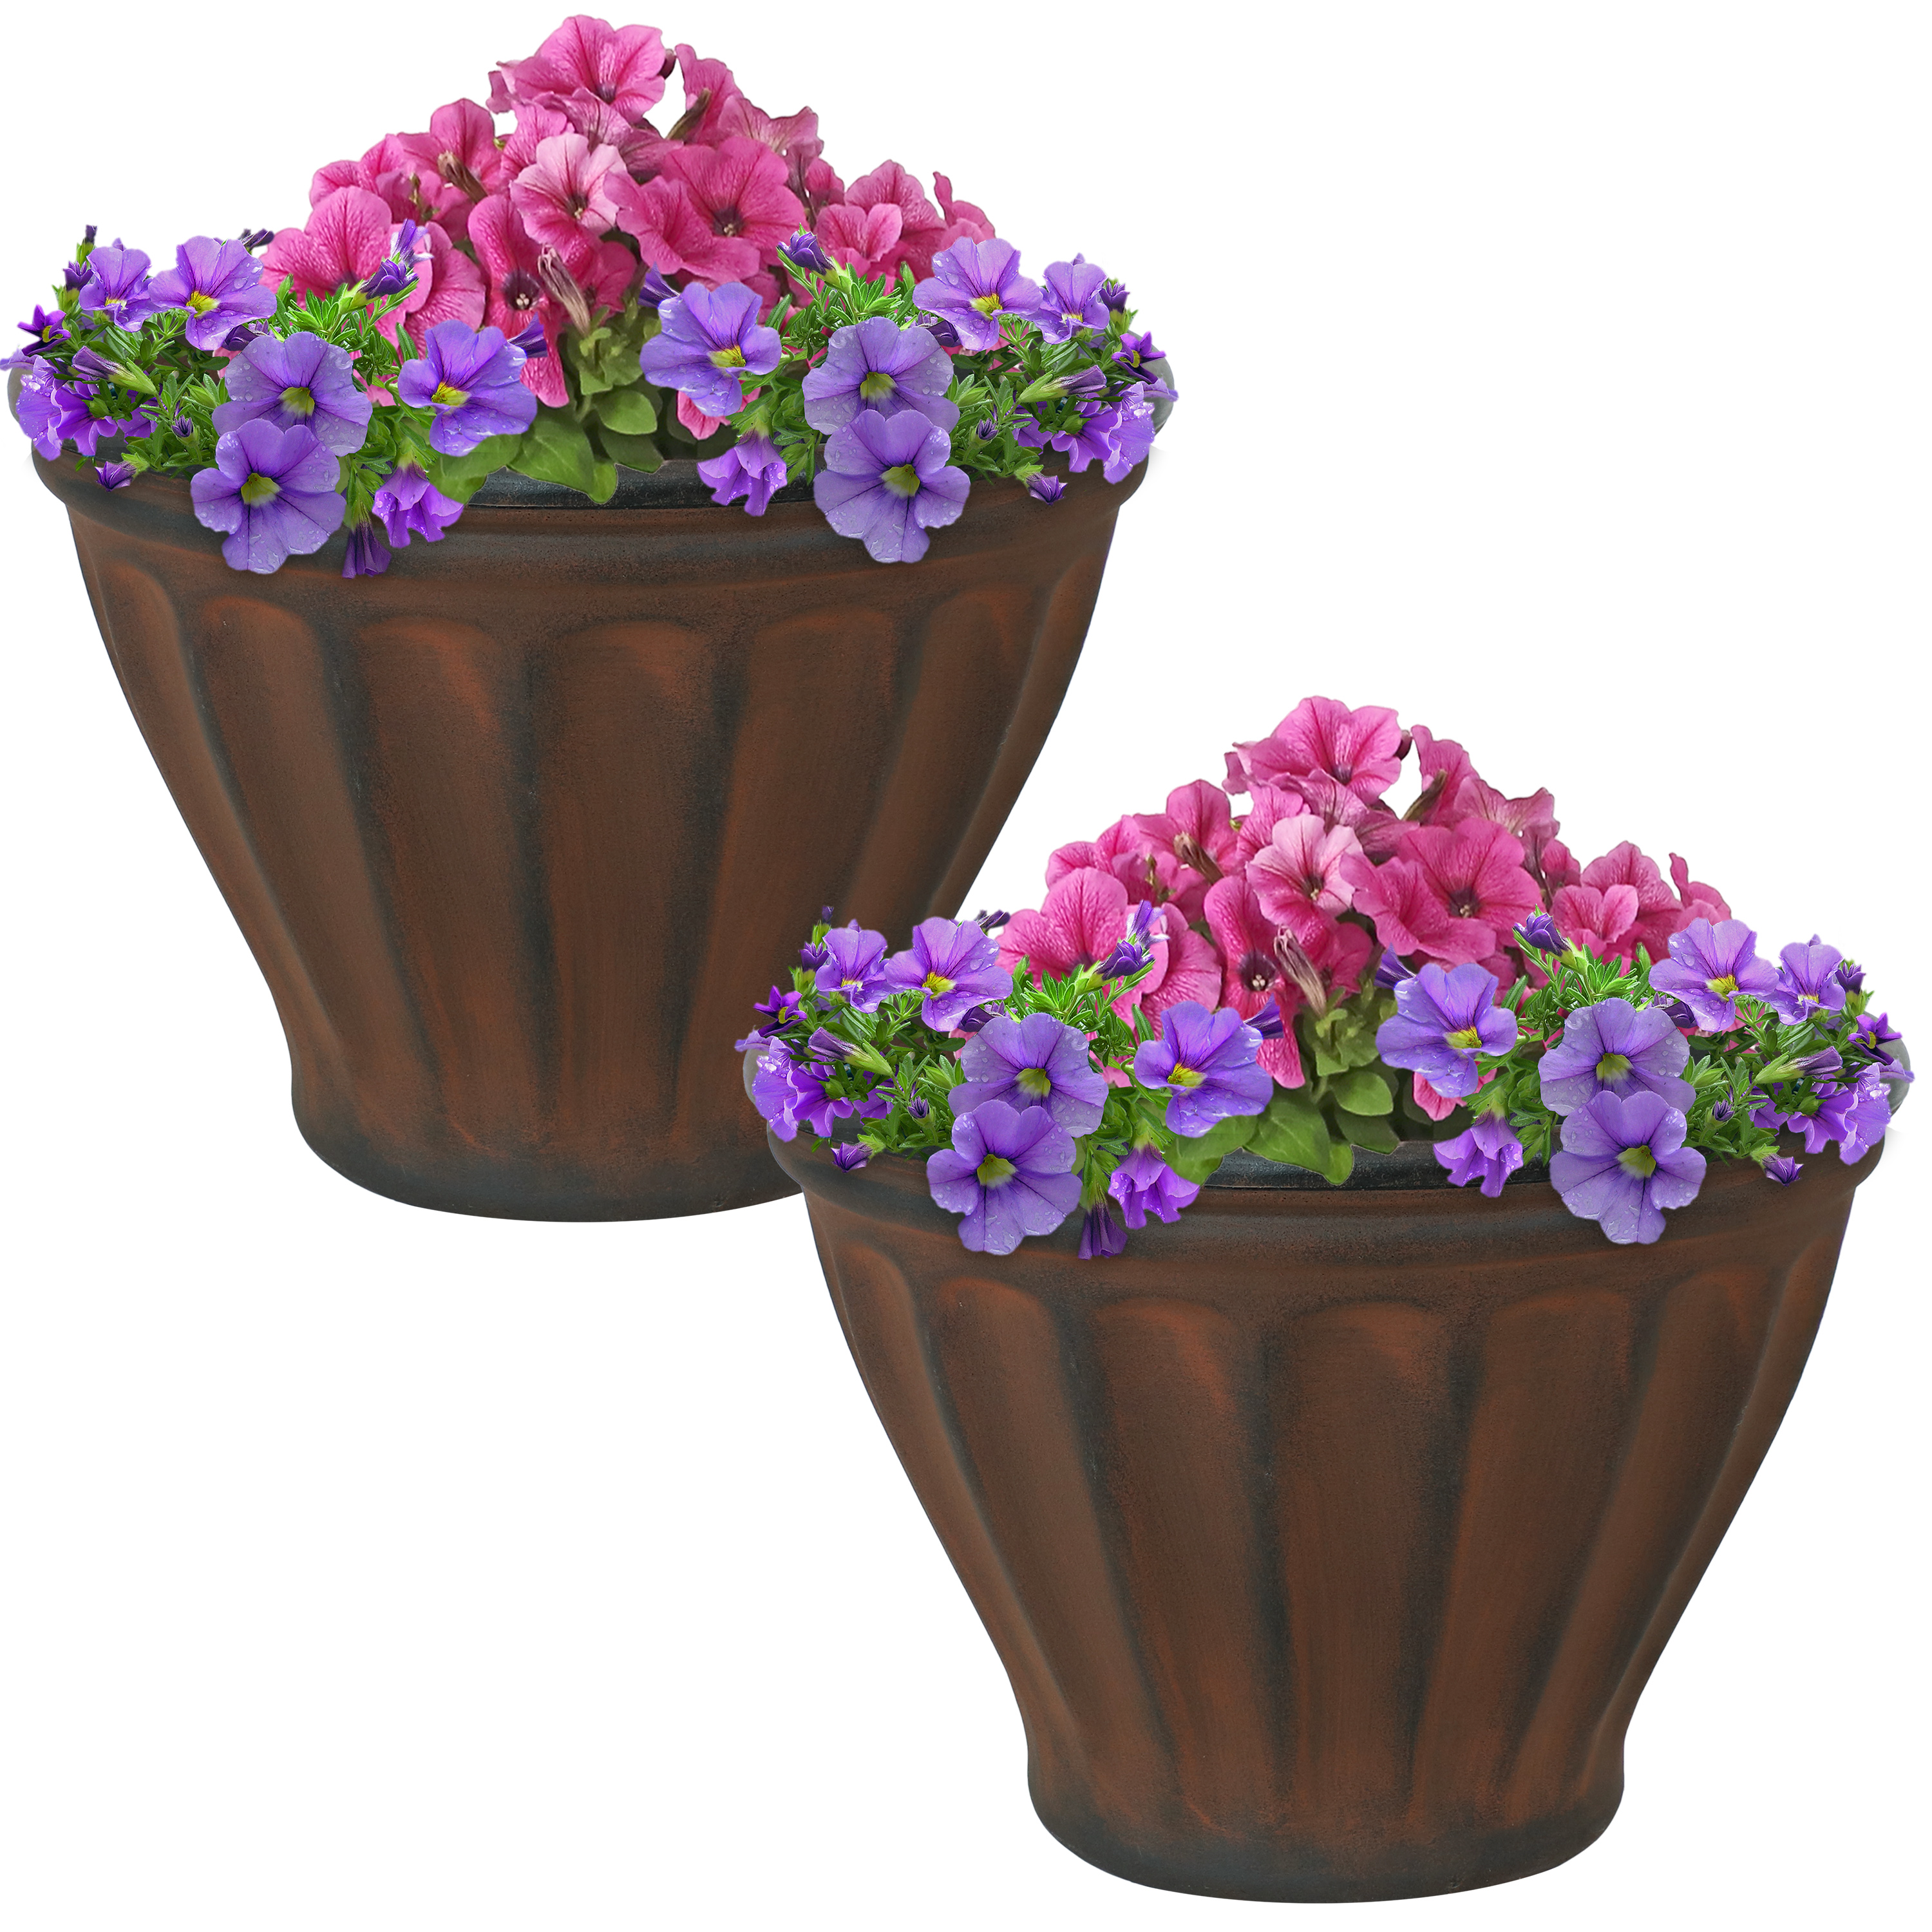 Sunnydaze Charlotte Outdoor Flower Pot Planter - Rust - 16-Inch - 2-Pack